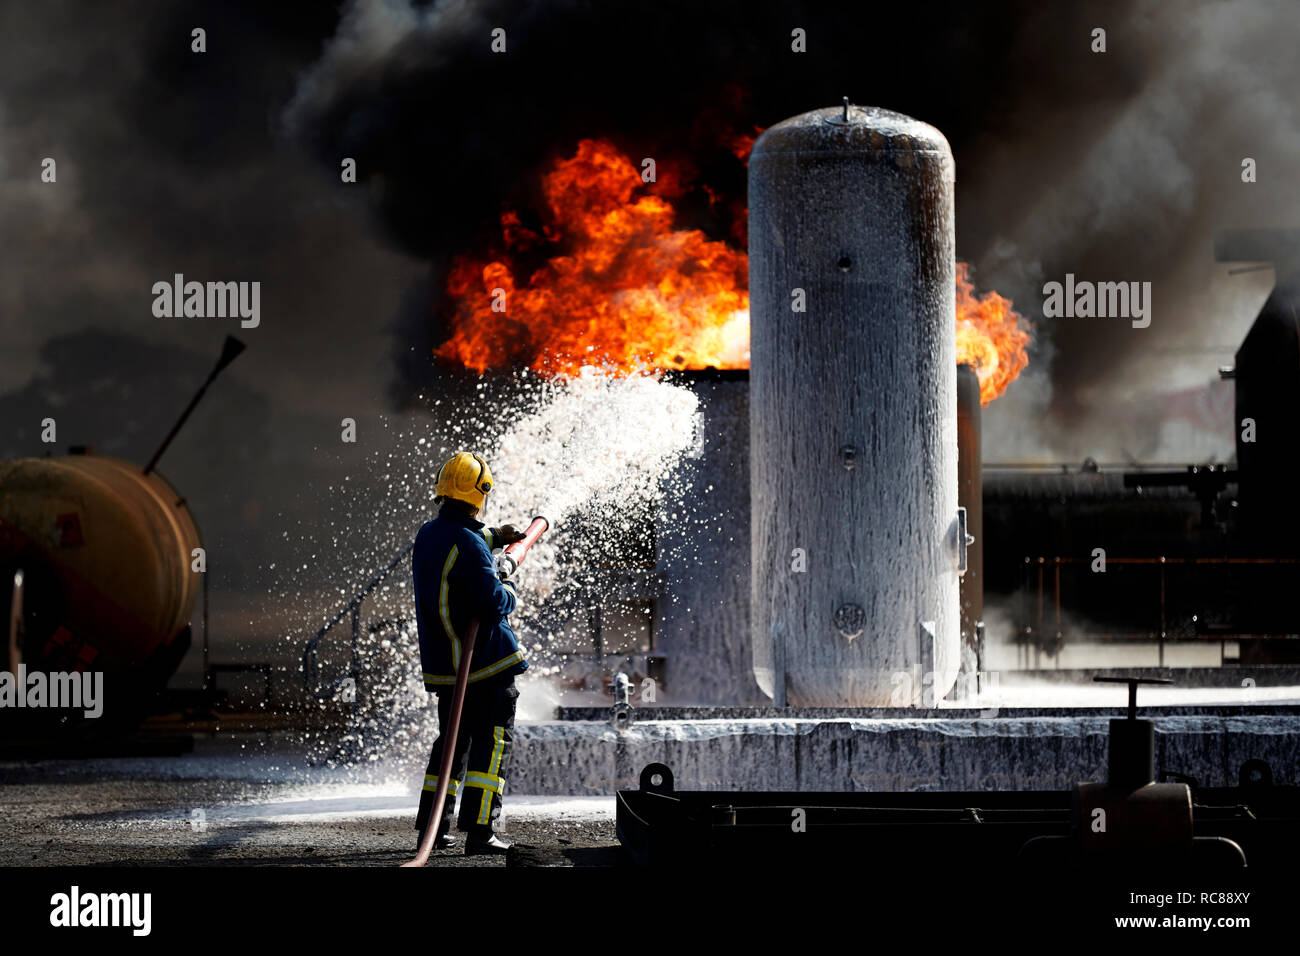 Fireman training to put out fire on burning tanks, Darlington, UK Stock Photo